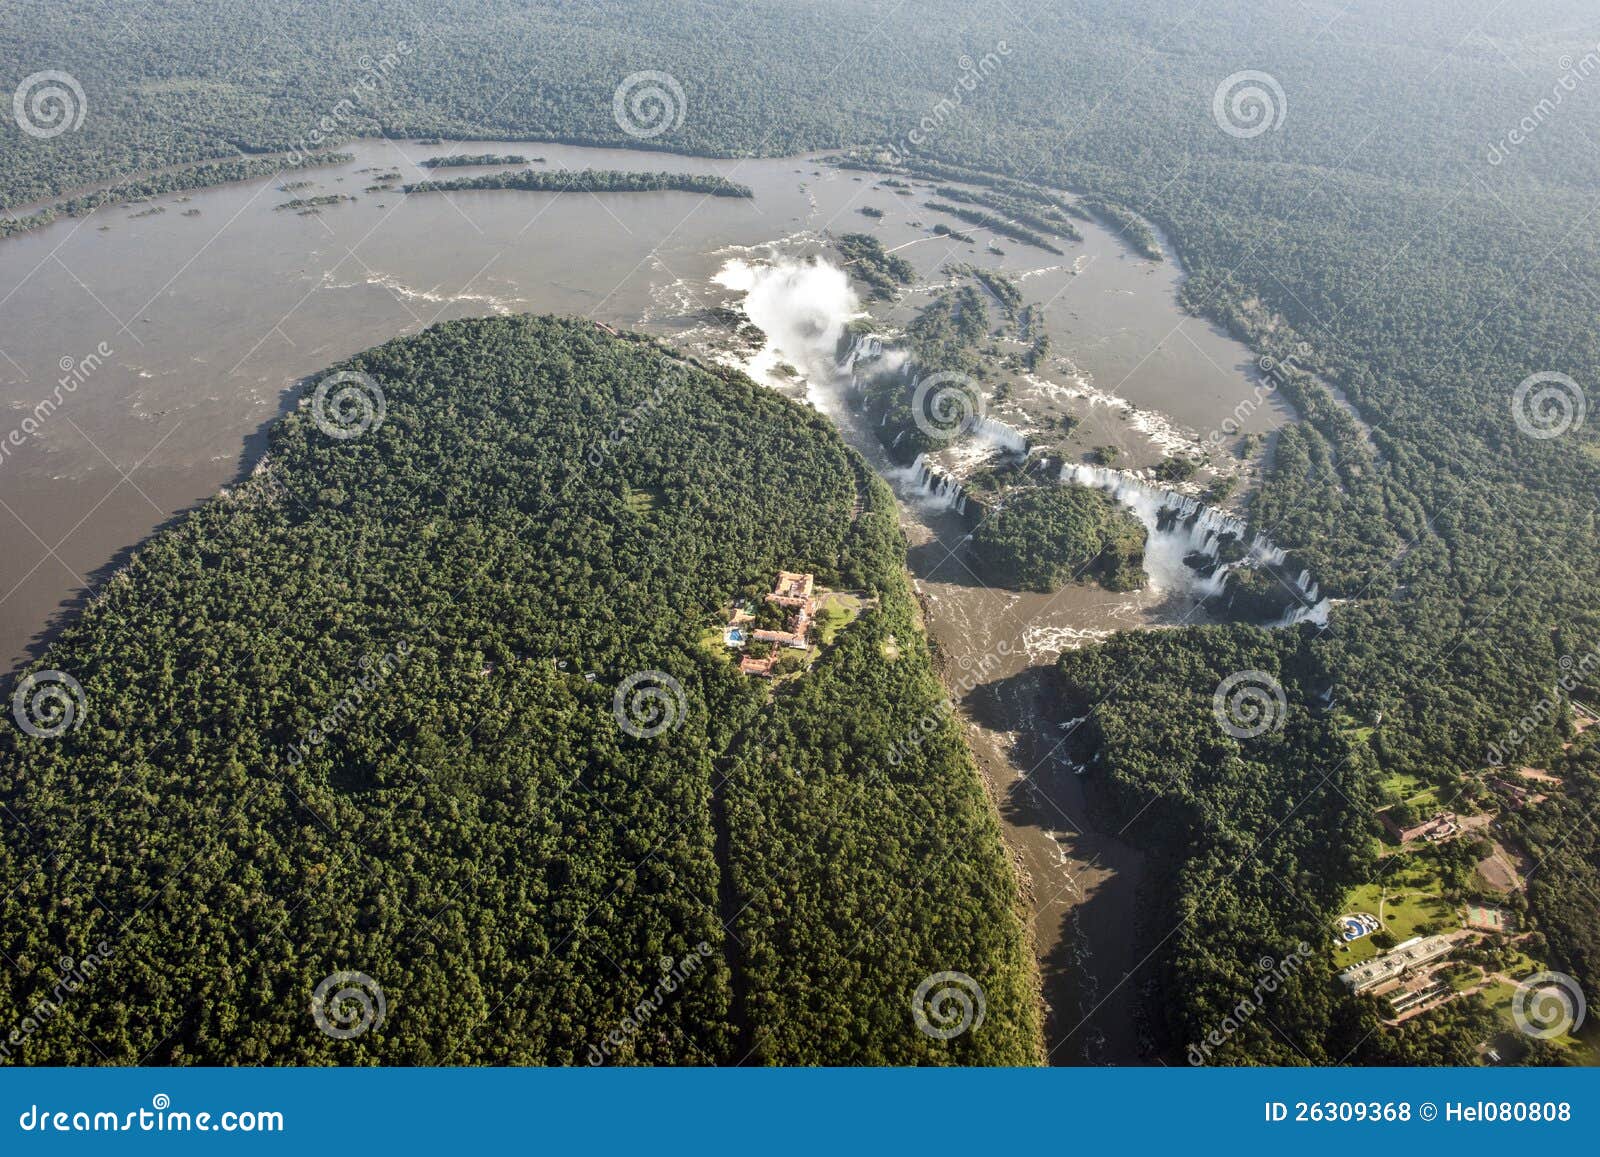 aerial image of iguazu falls, argentina, brazil